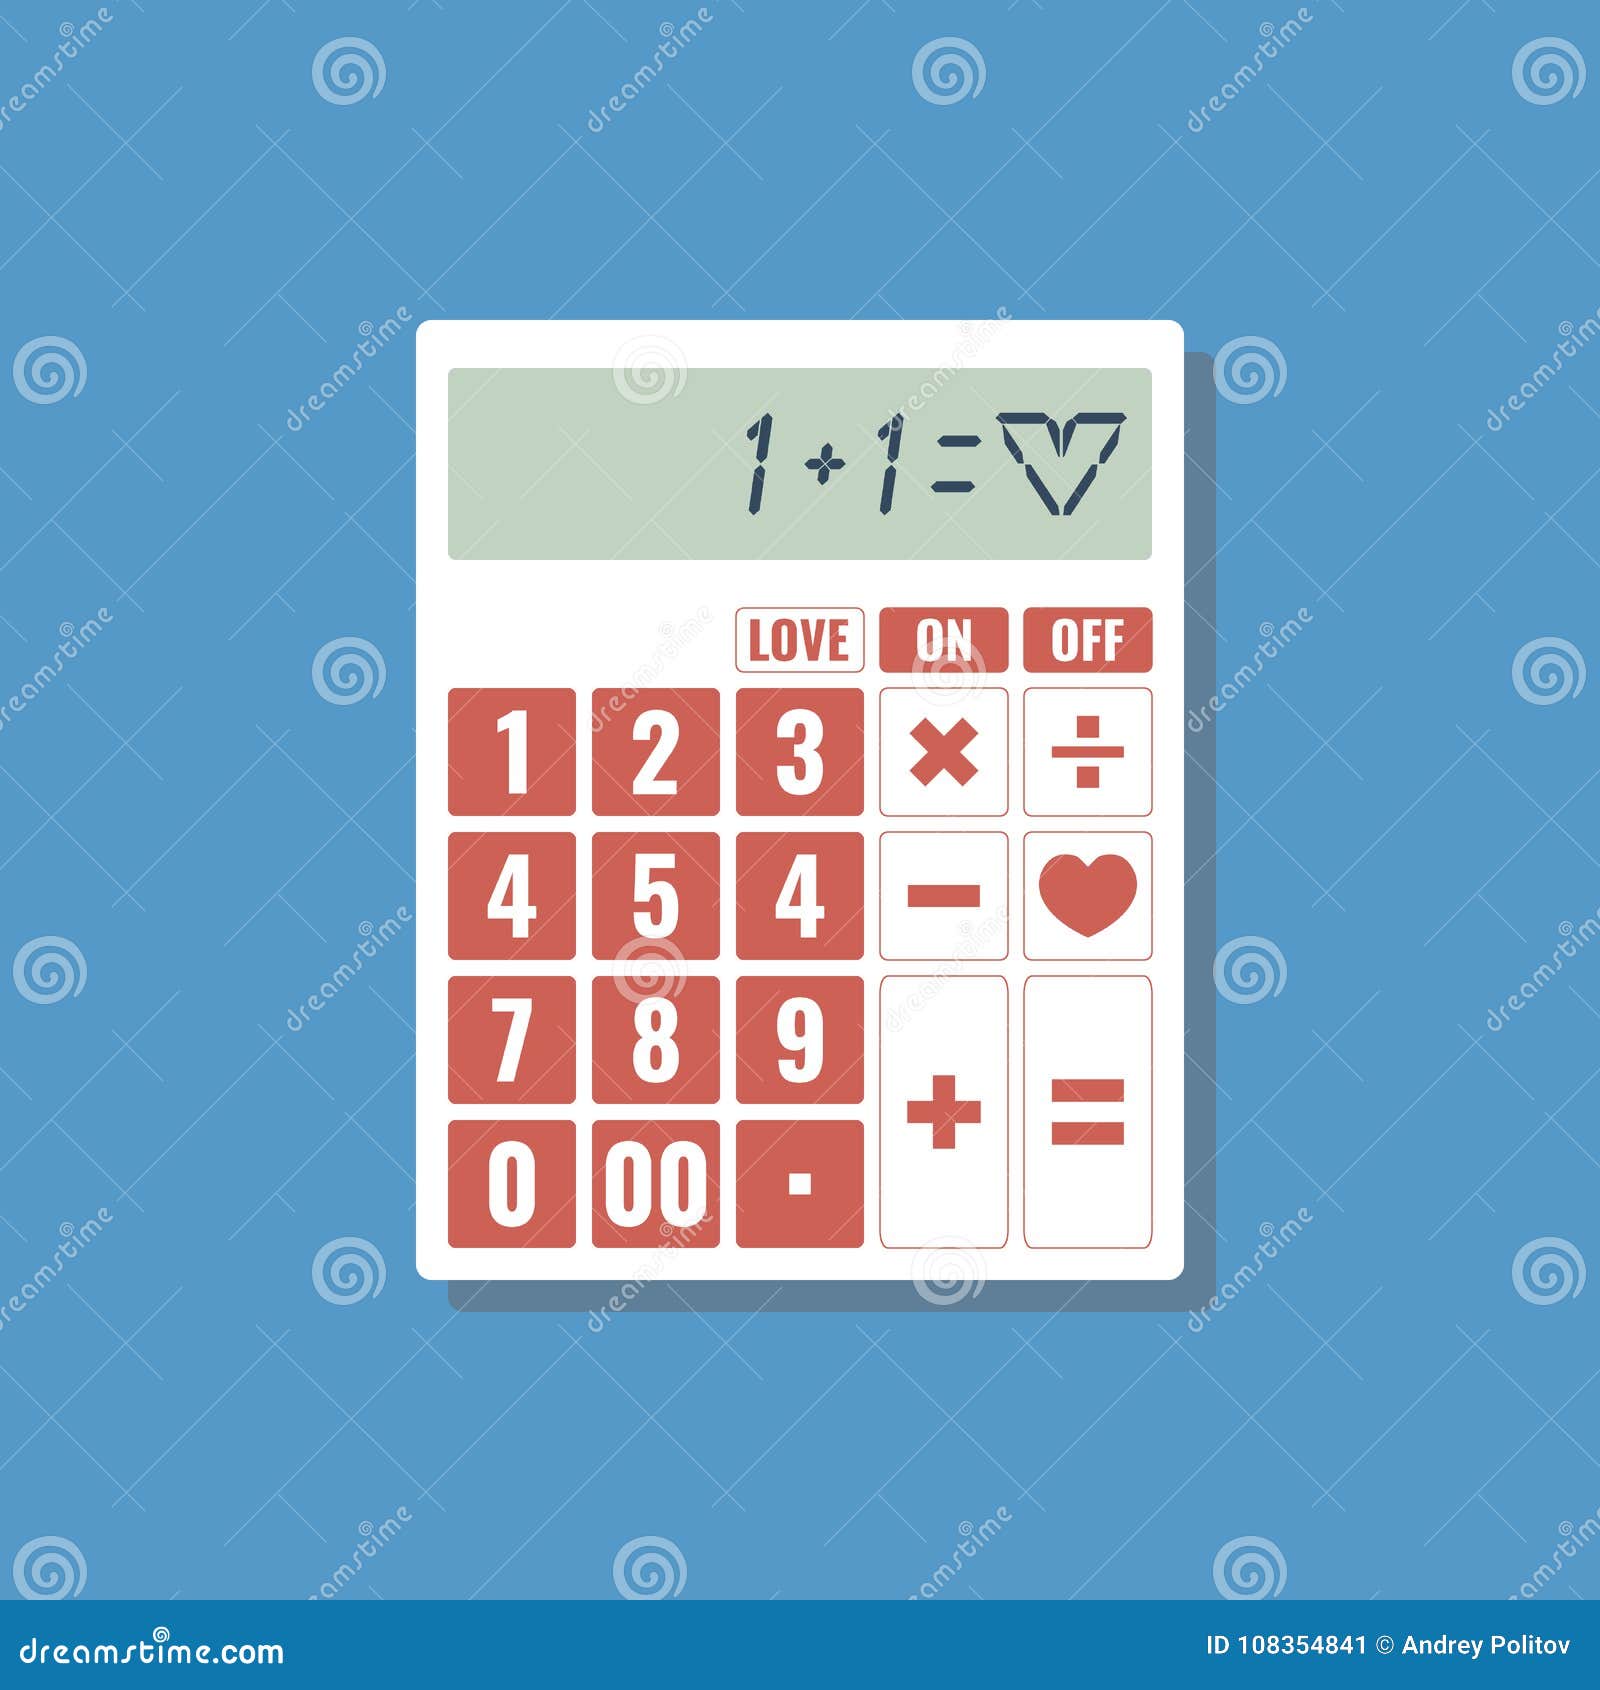 Love calculator